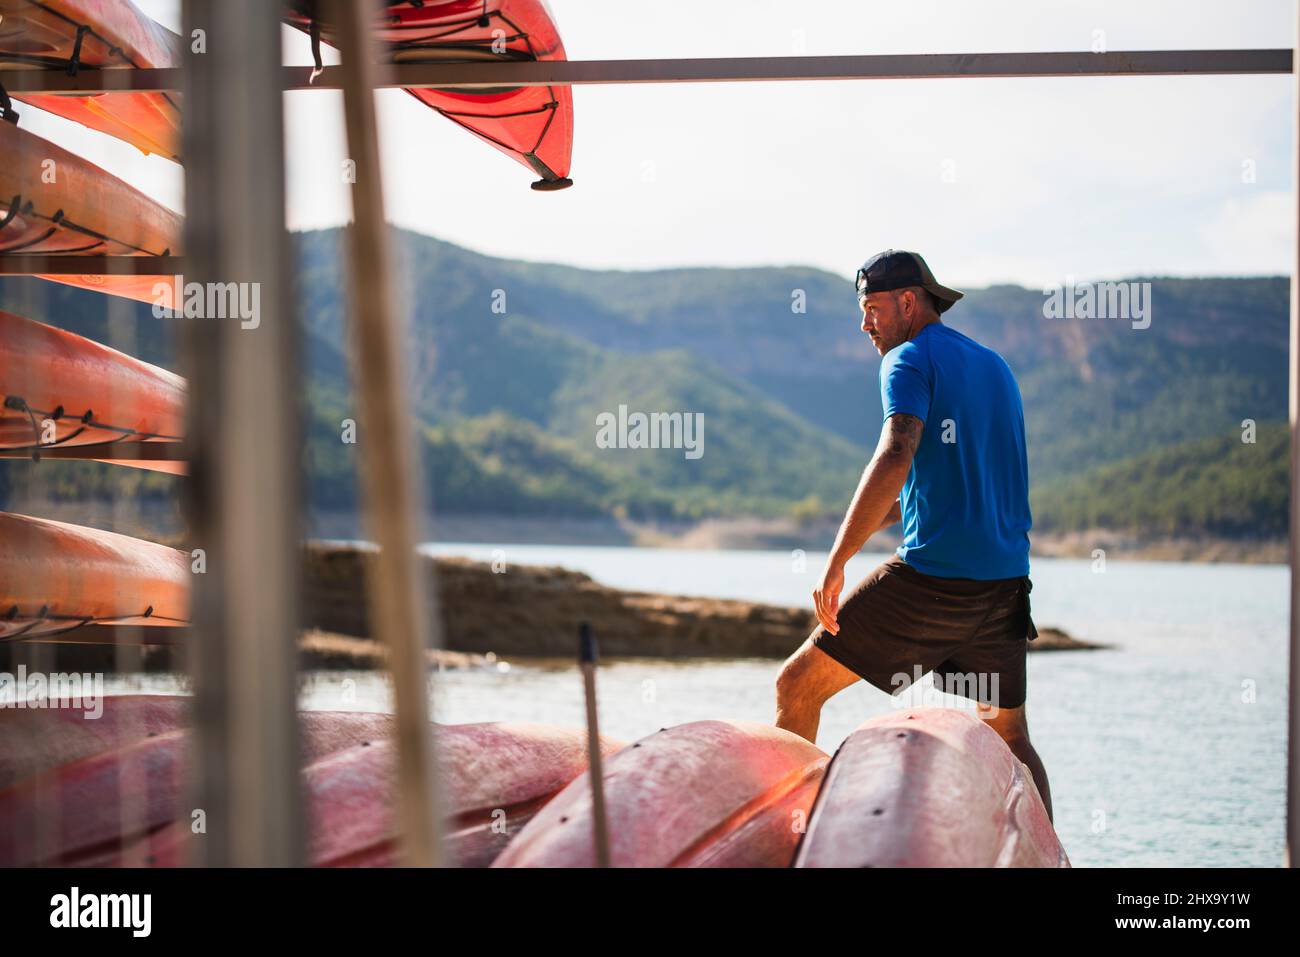 Young man doing maintenance work at a kayak rental company. Stock Photo